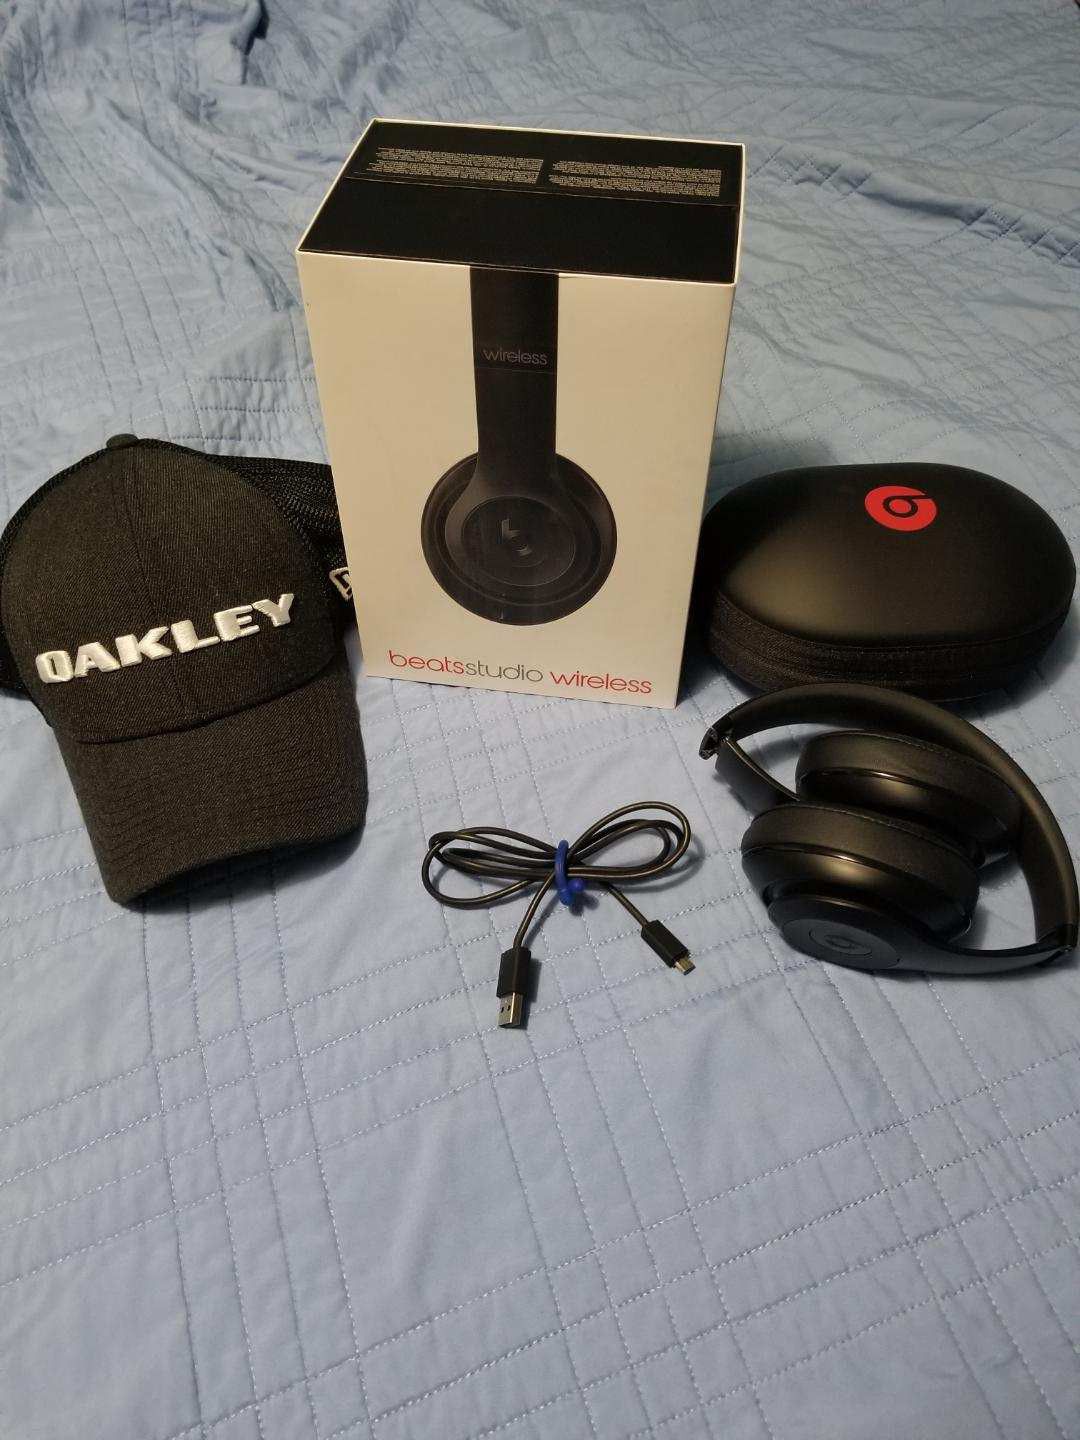 Beats Studio Wireless And Oakley Hat